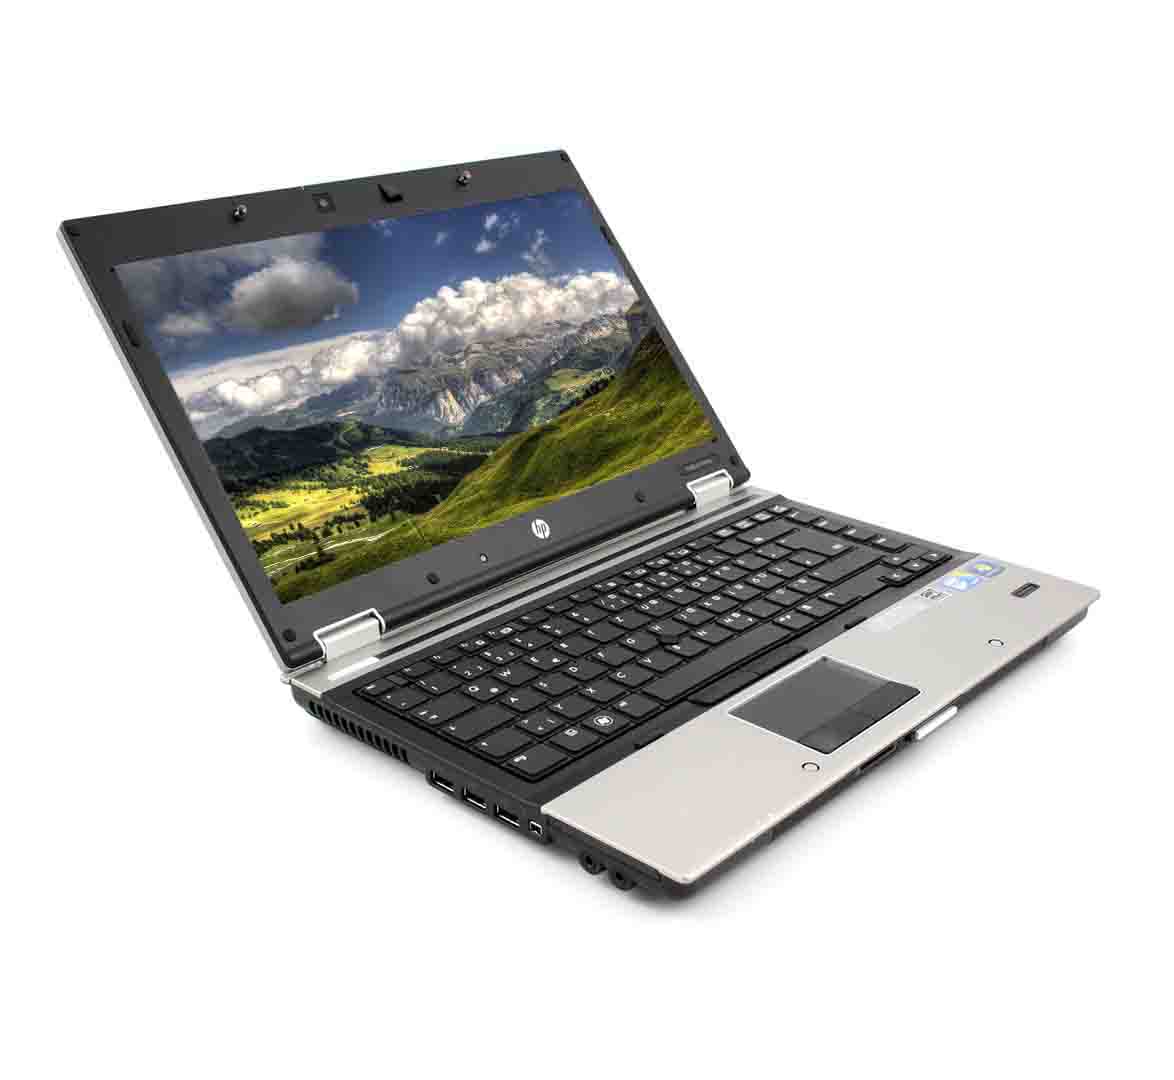 Hp Elitebook 8440p Business Laptop Intel Core I5 1st Generation Cpu 4gb Ram 320gb Hdd 14